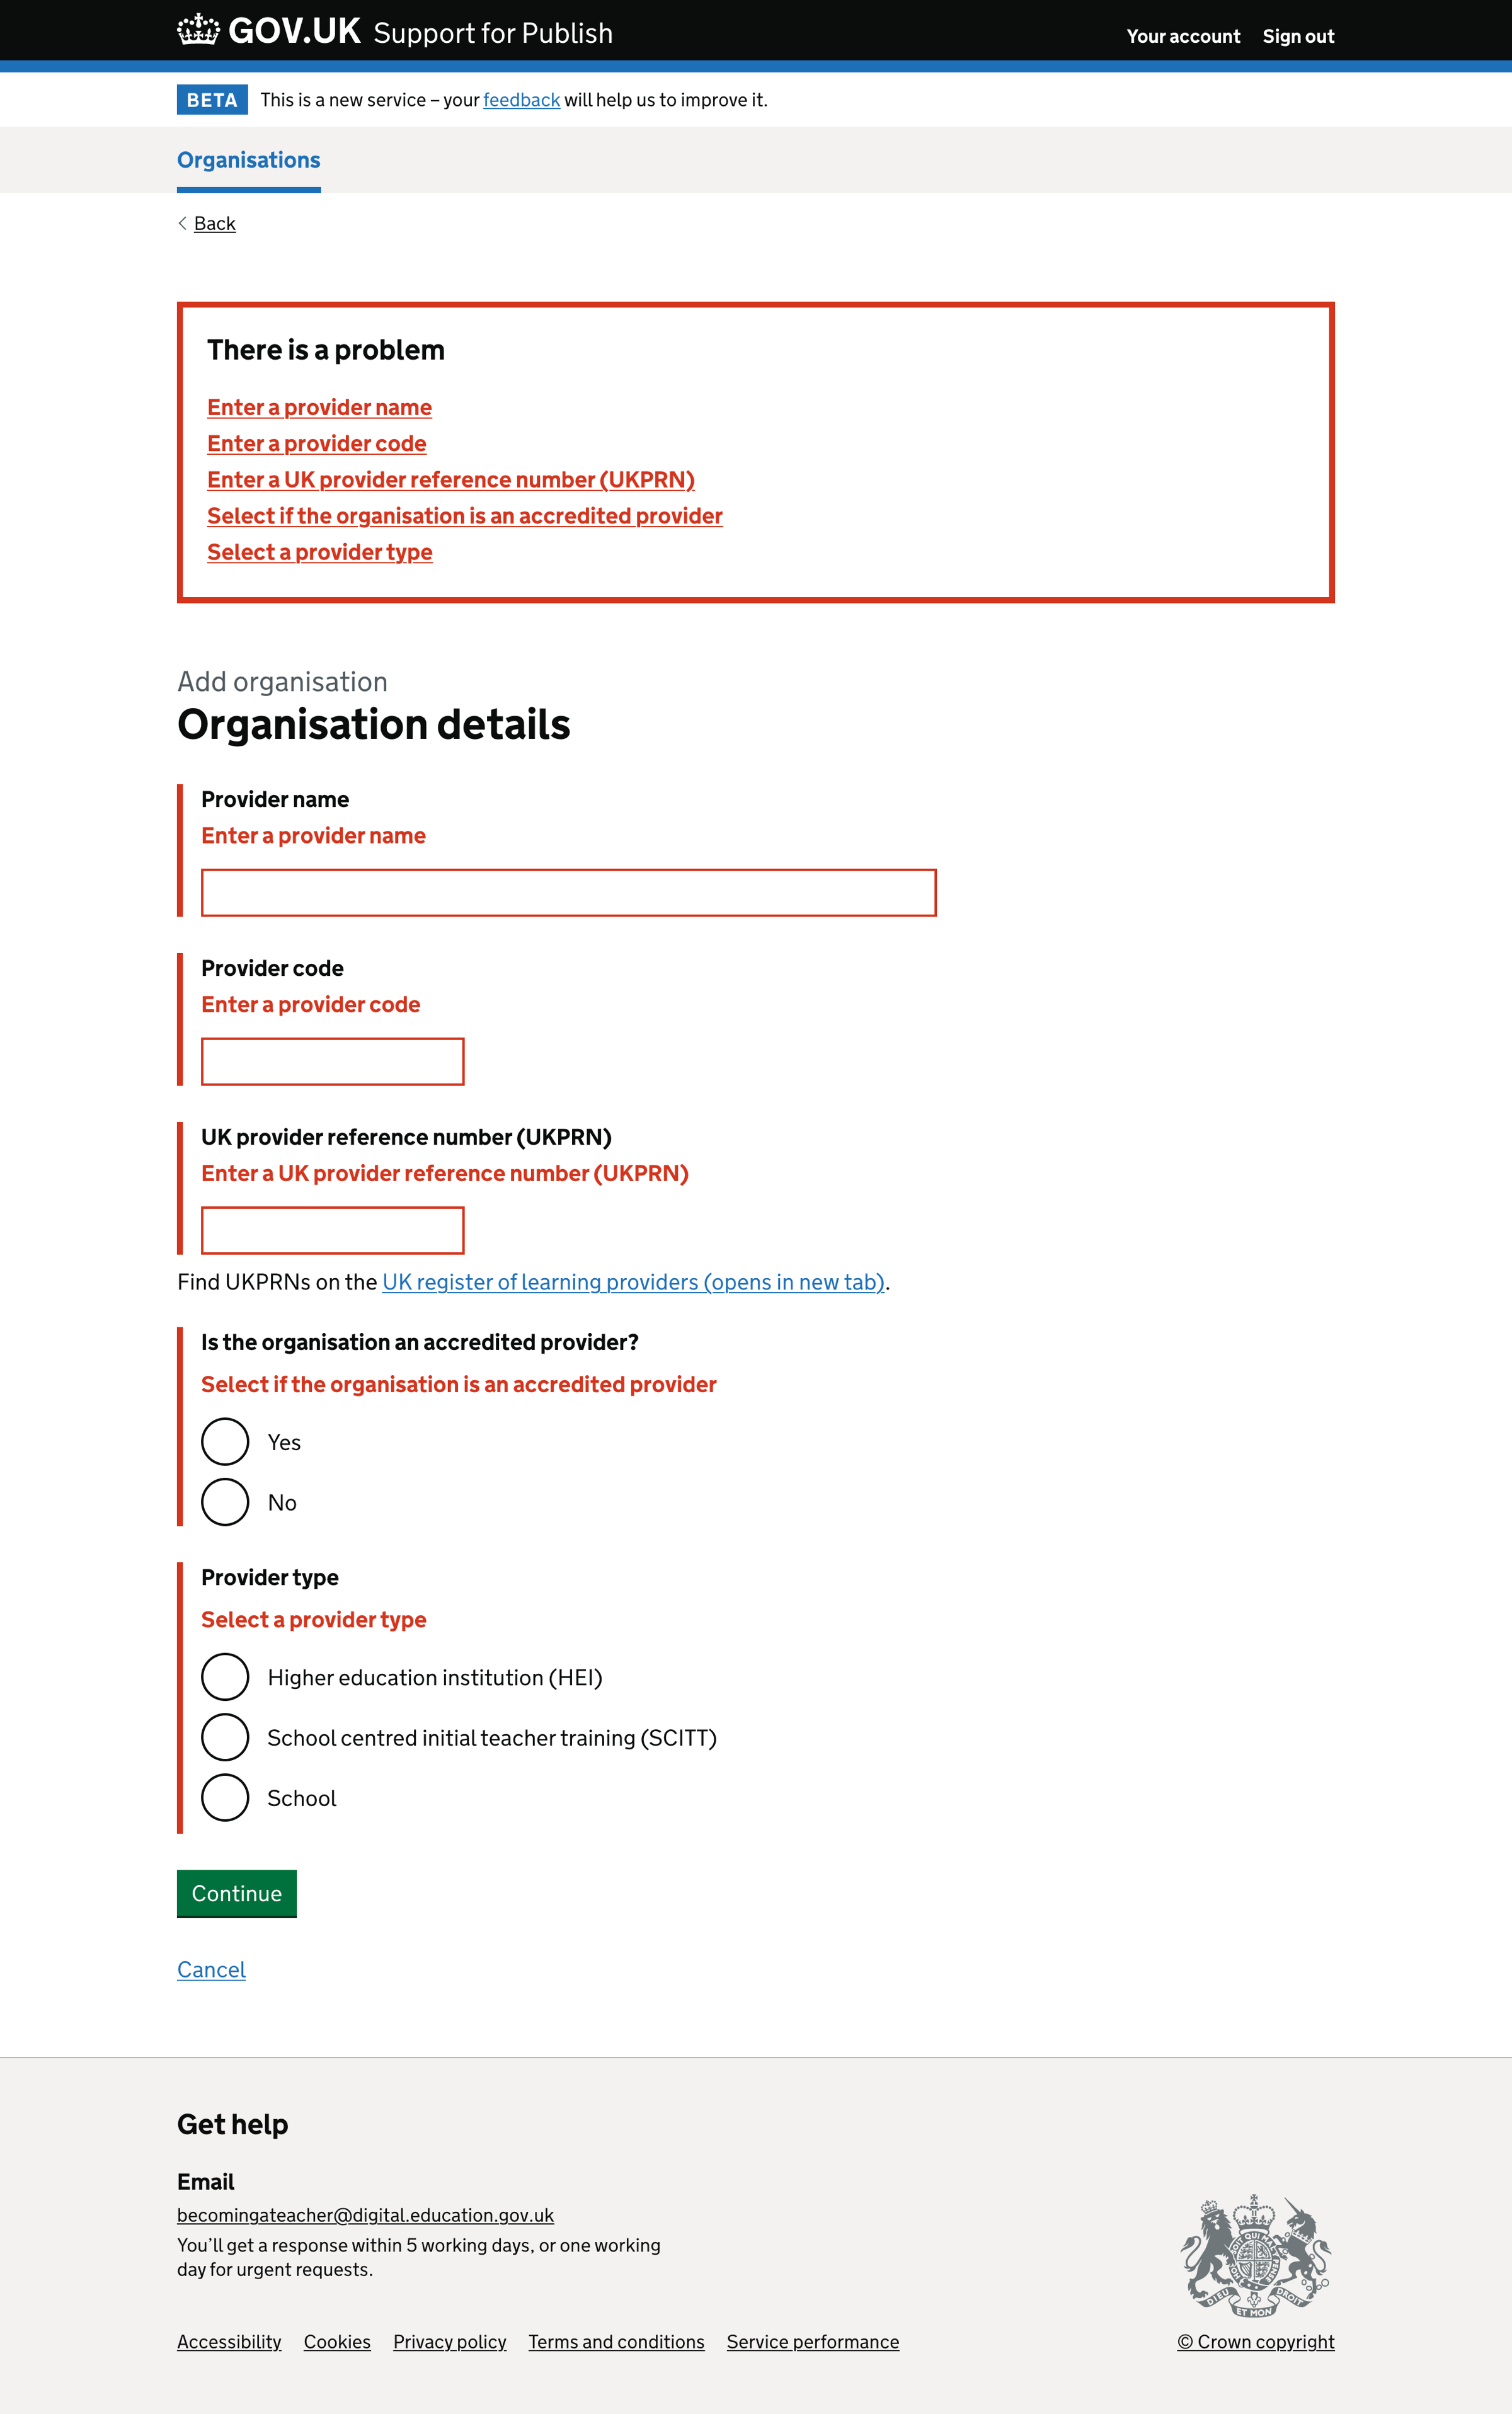 Screenshot of Add organisation details - errors